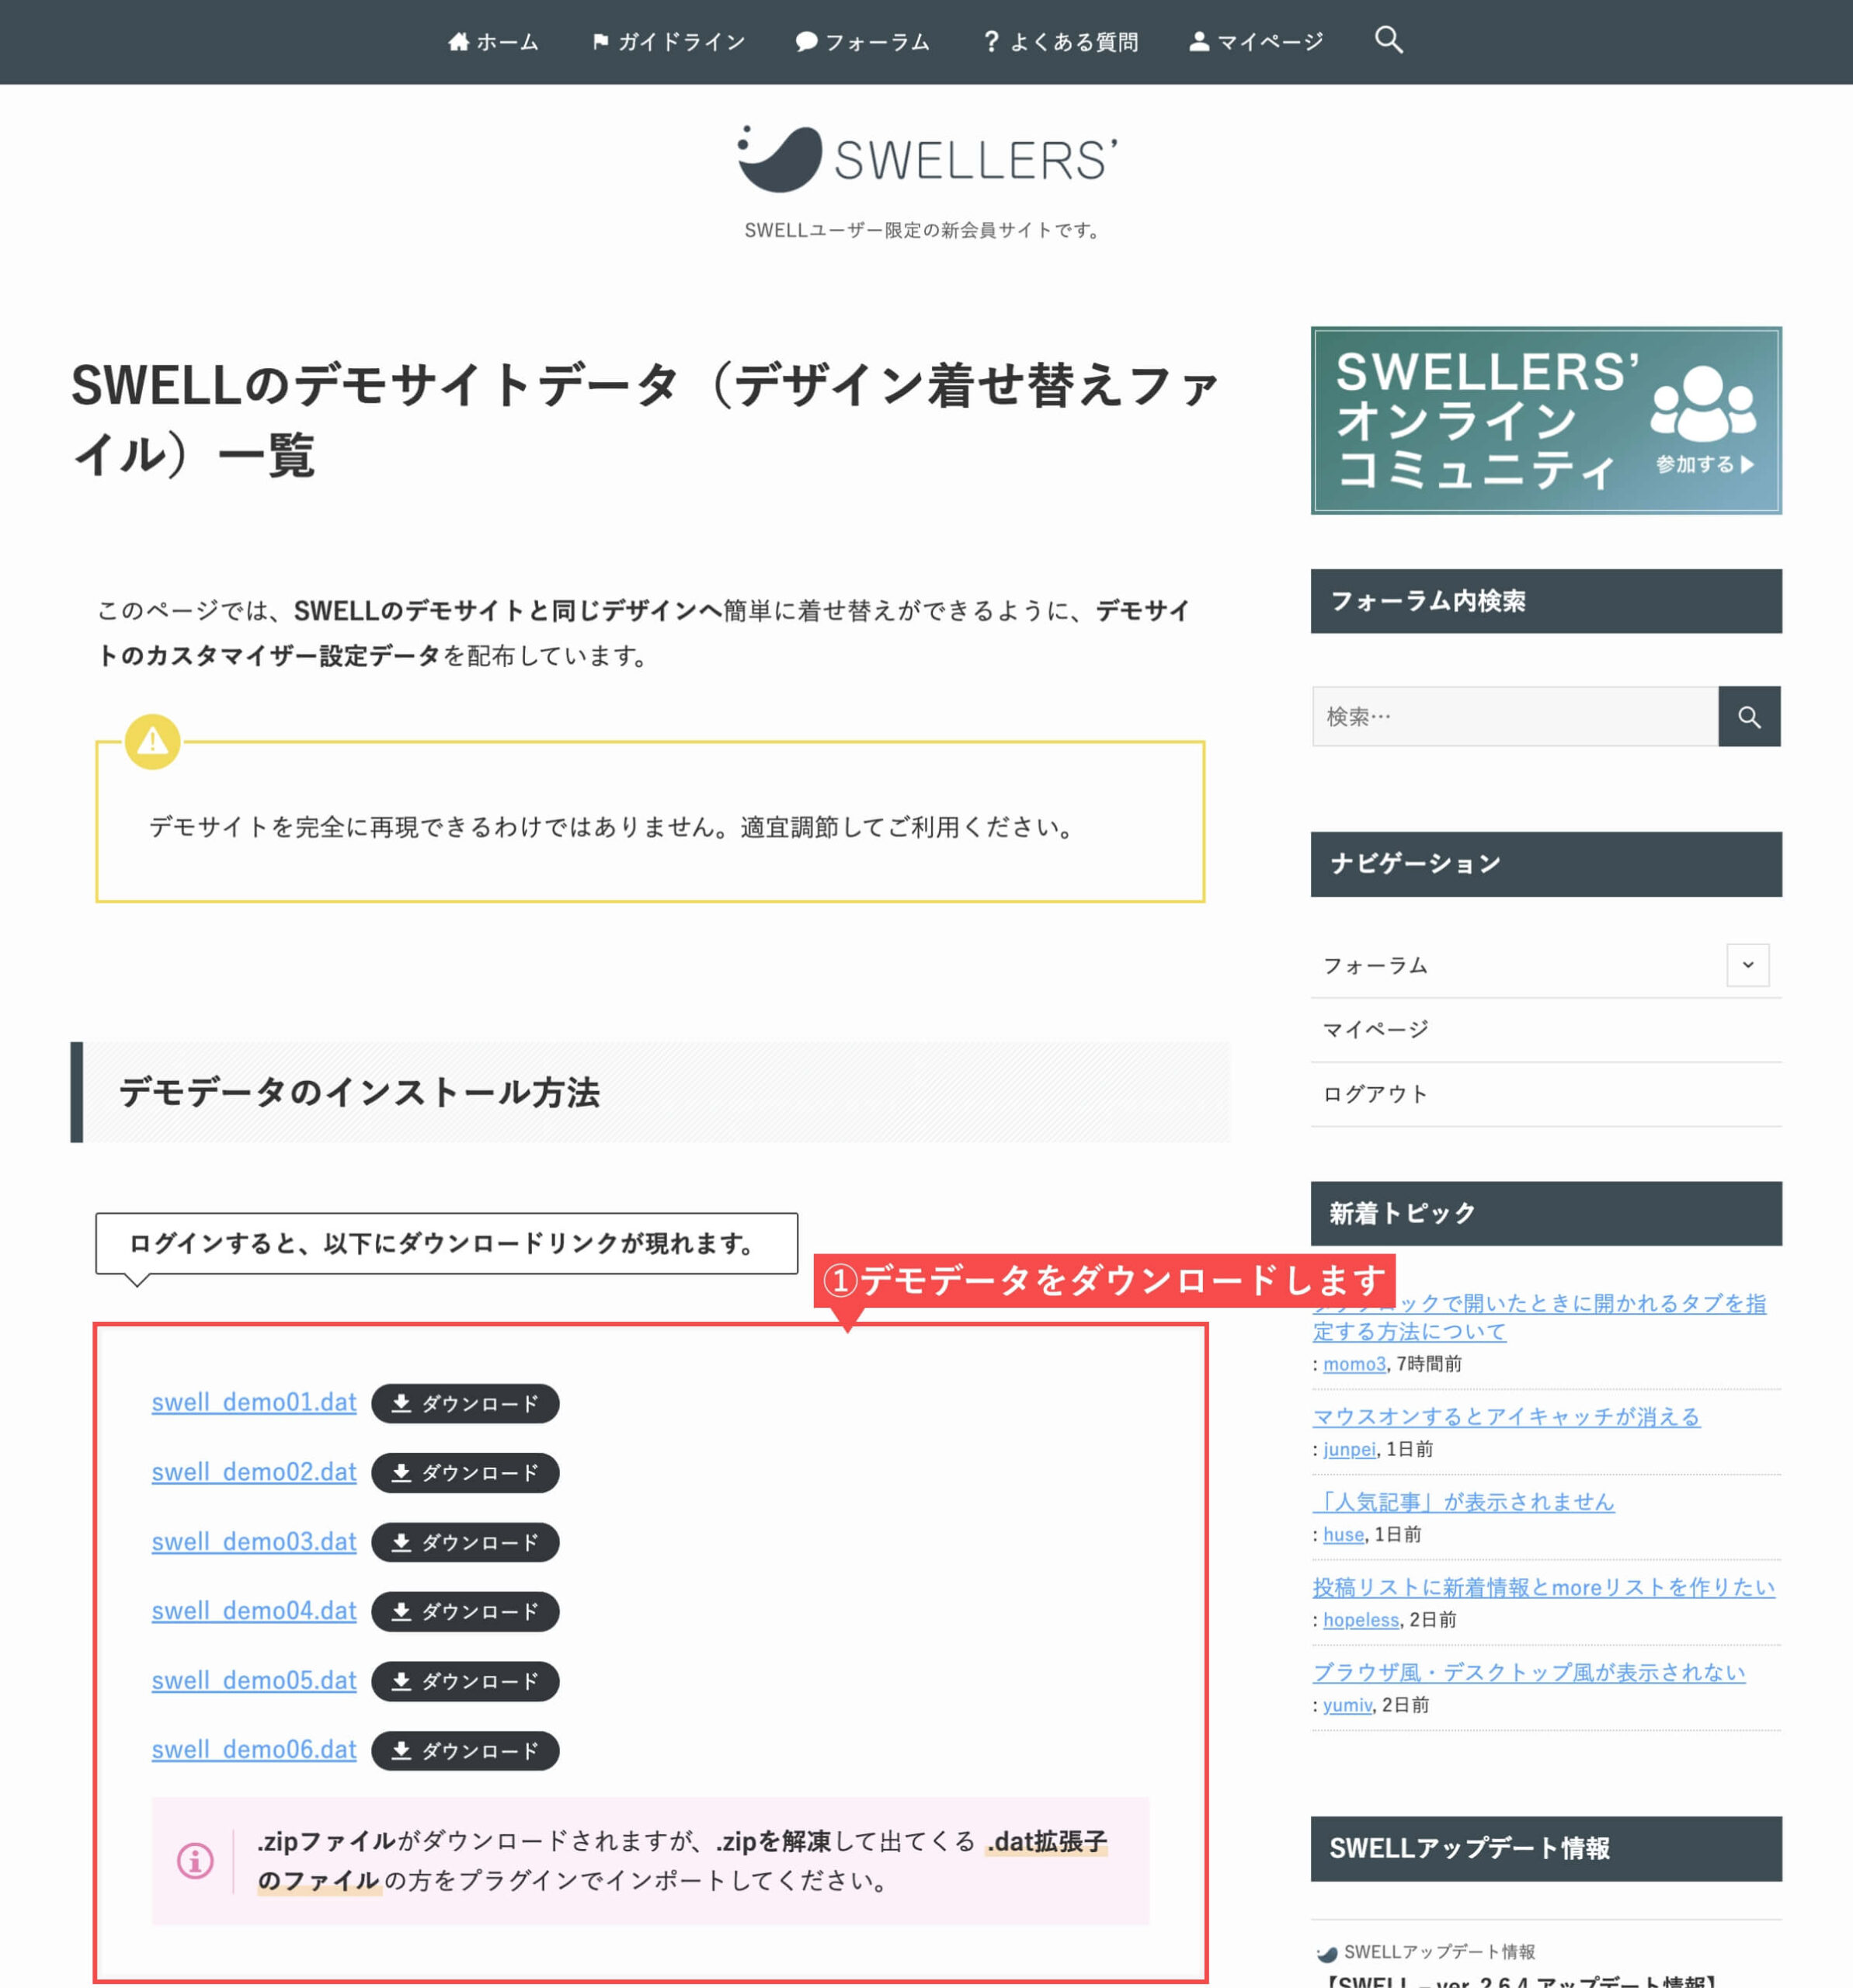 SWELLERS'会員サイトのデモサイトデータページ